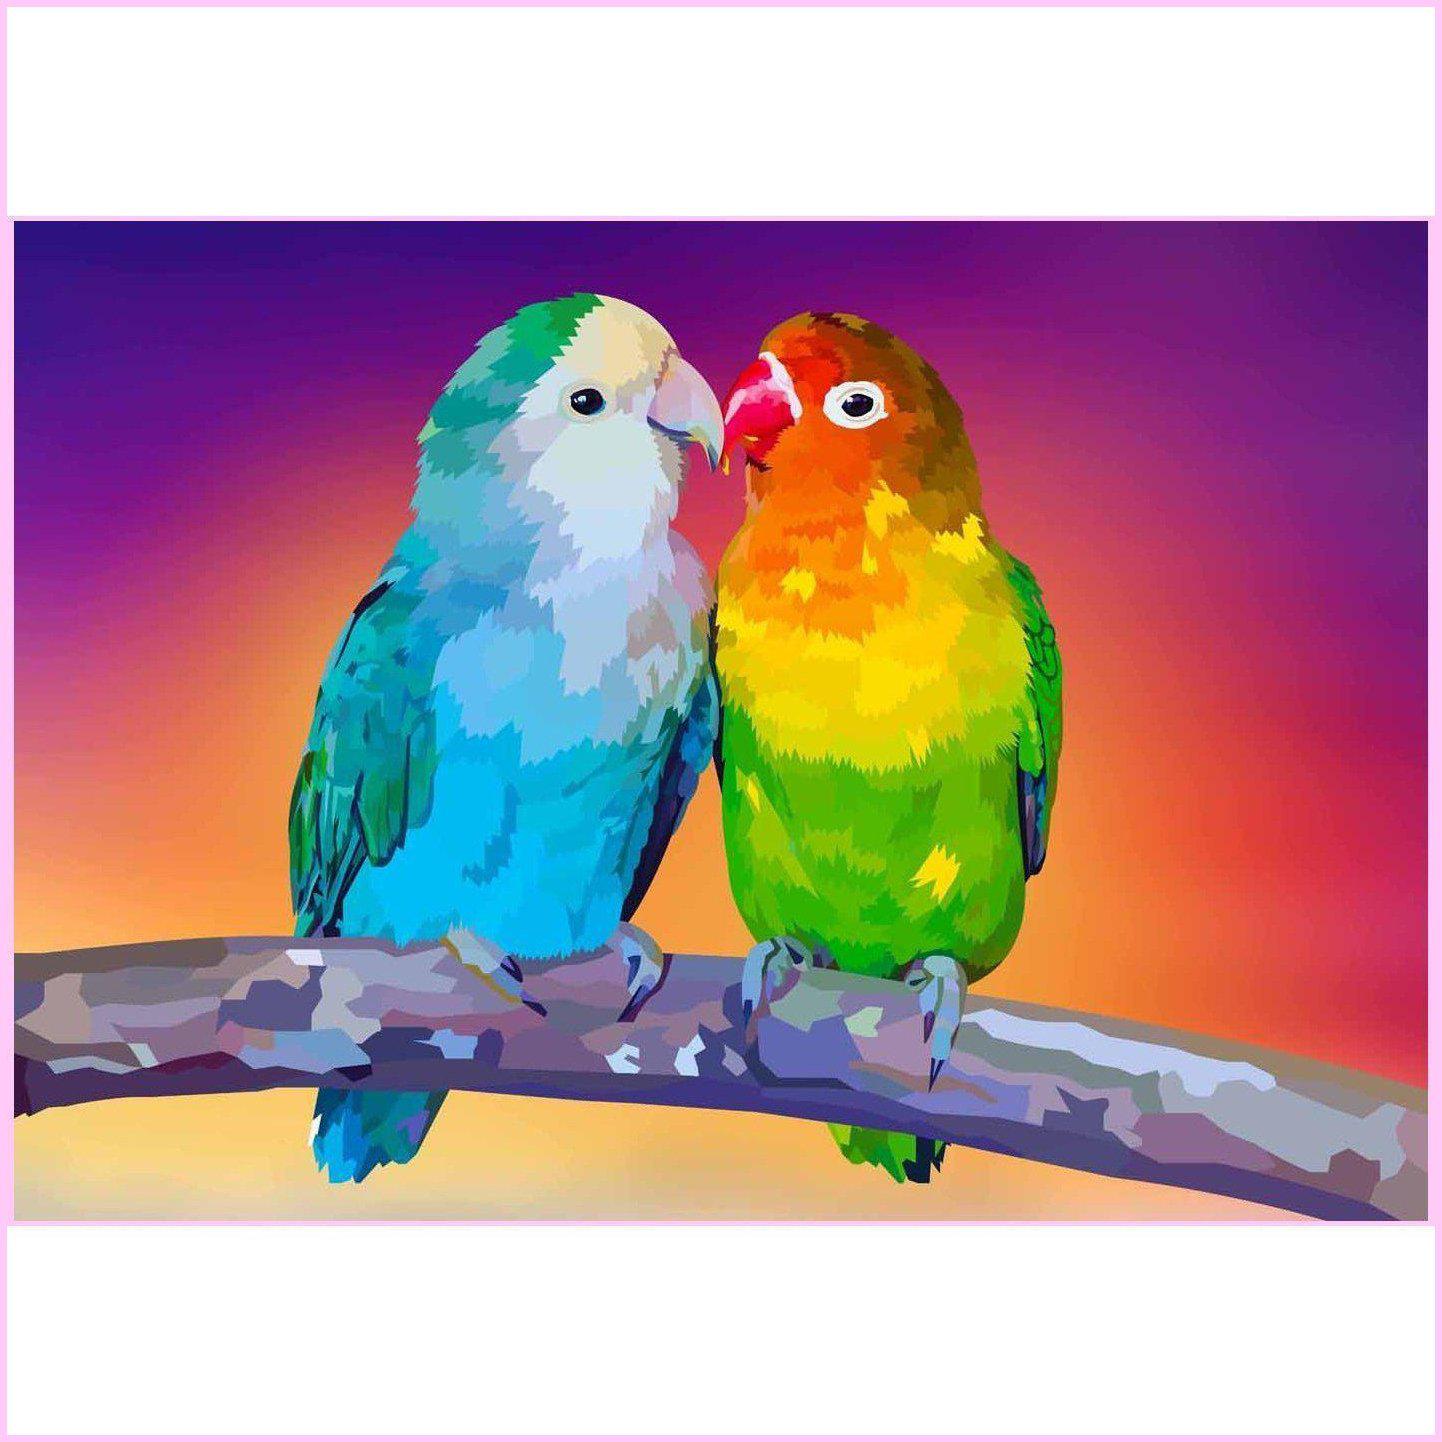 https://cdn.shopify.com/s/files/1/2529/5140/products/cuddling-colorful-birds-diamond-painting-kit-usps-ytg-official-store-35x50cm-14x20-in-square_c5539657-732a-4b0a-ad8b-e8b41c46396a.jpg?v=1689925877&width=2884